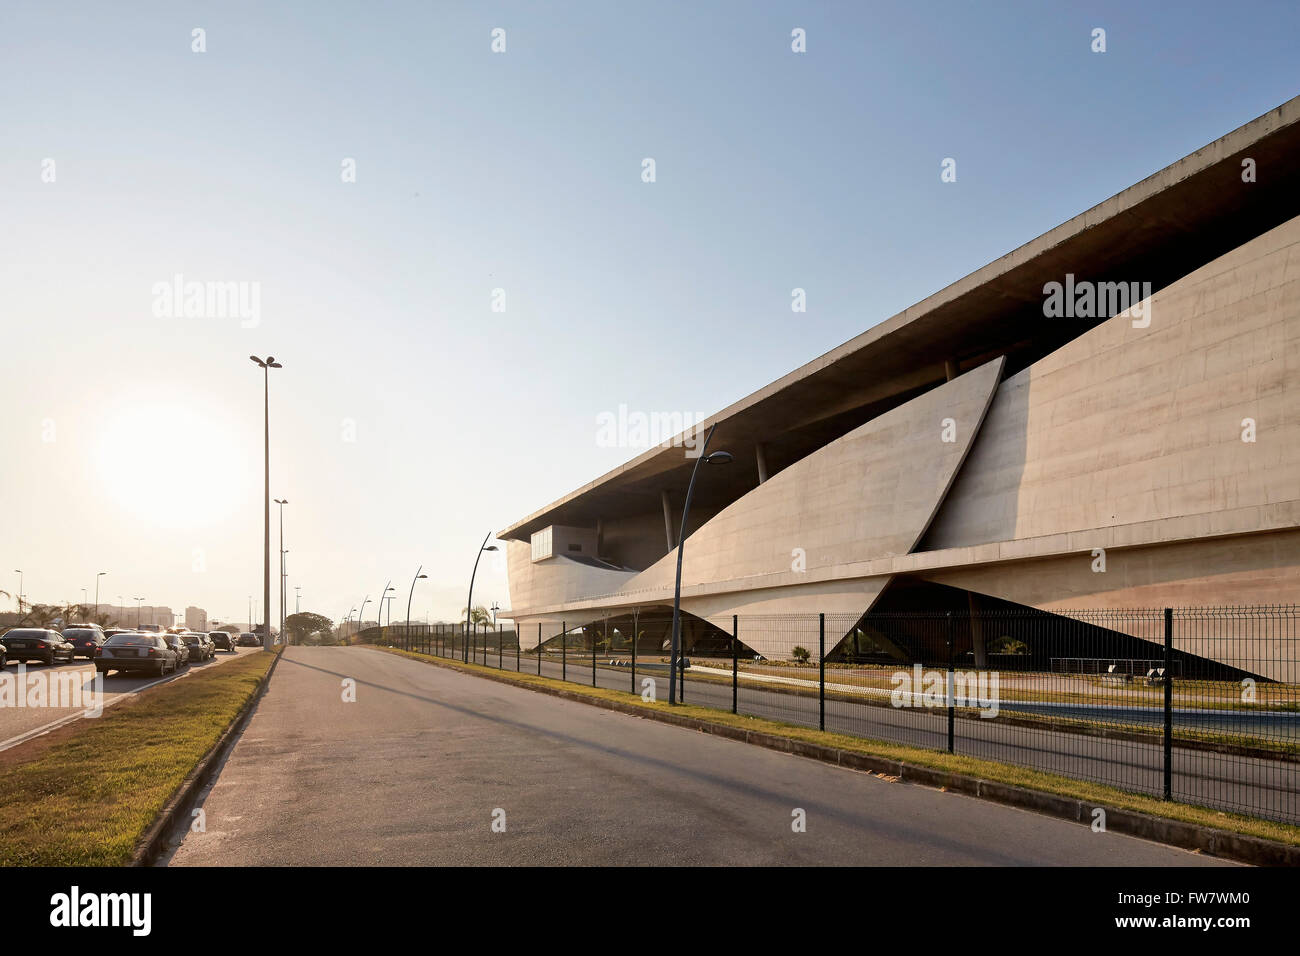 Fassade und Street Perspektive. La Cidade Das Artes, Barra da Tijuca, Brasilien. Architekt: Christian de Portzamparc, 2014. Stockfoto